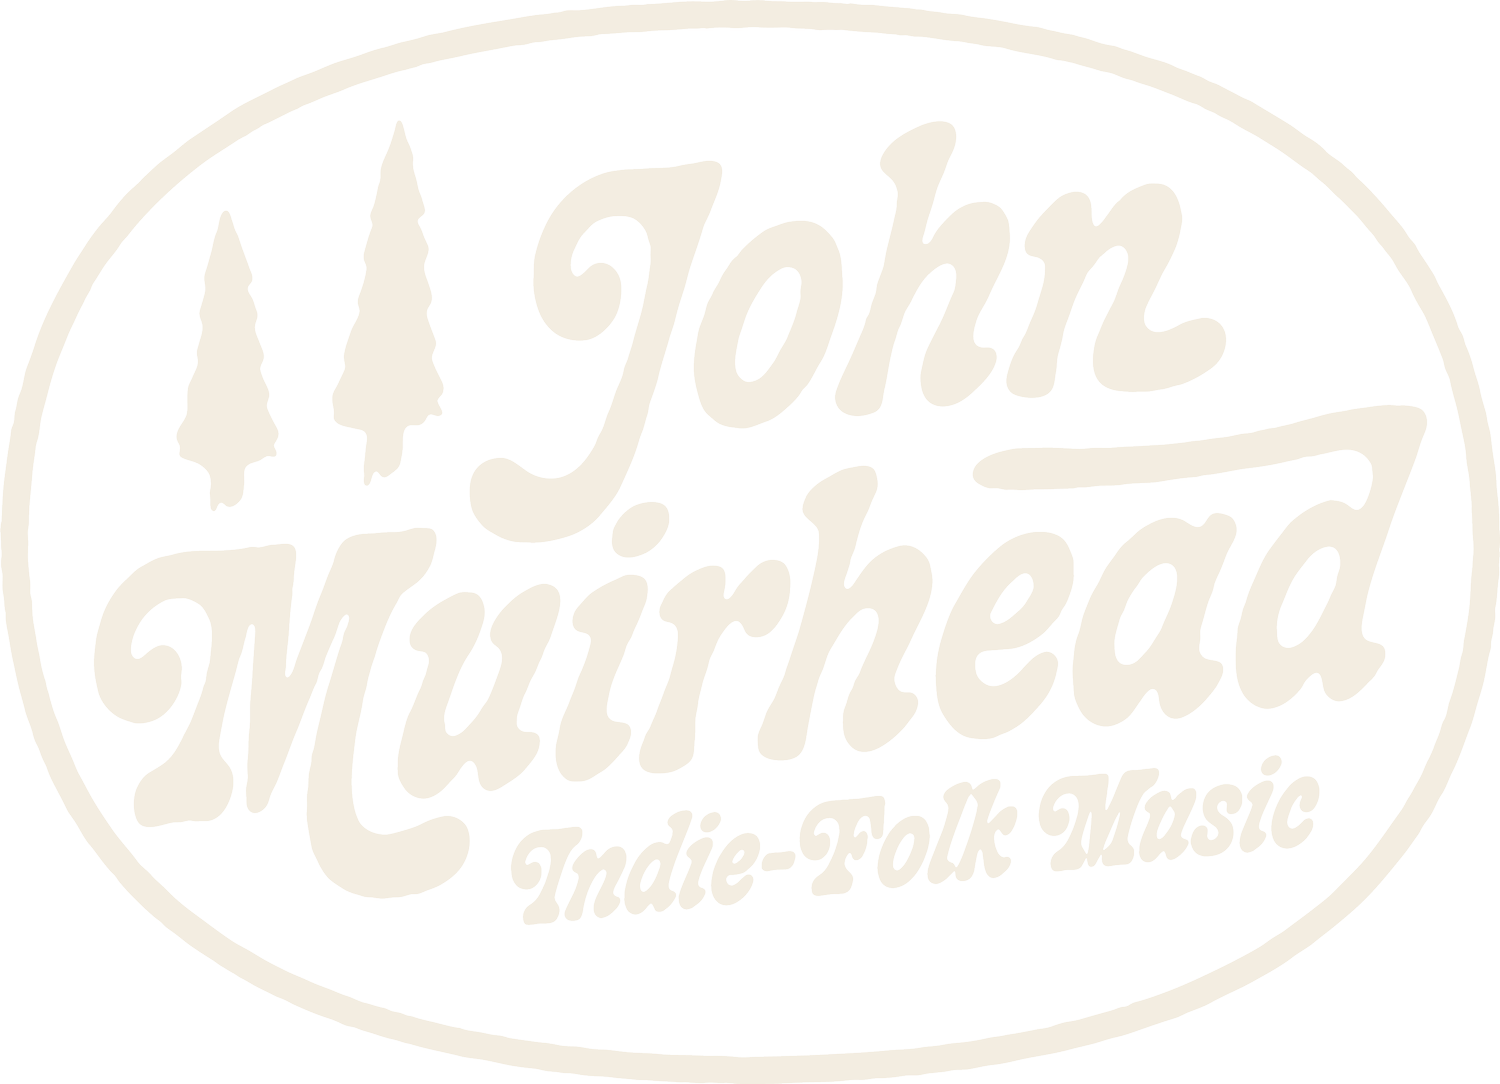 JOHN MUIRHEAD